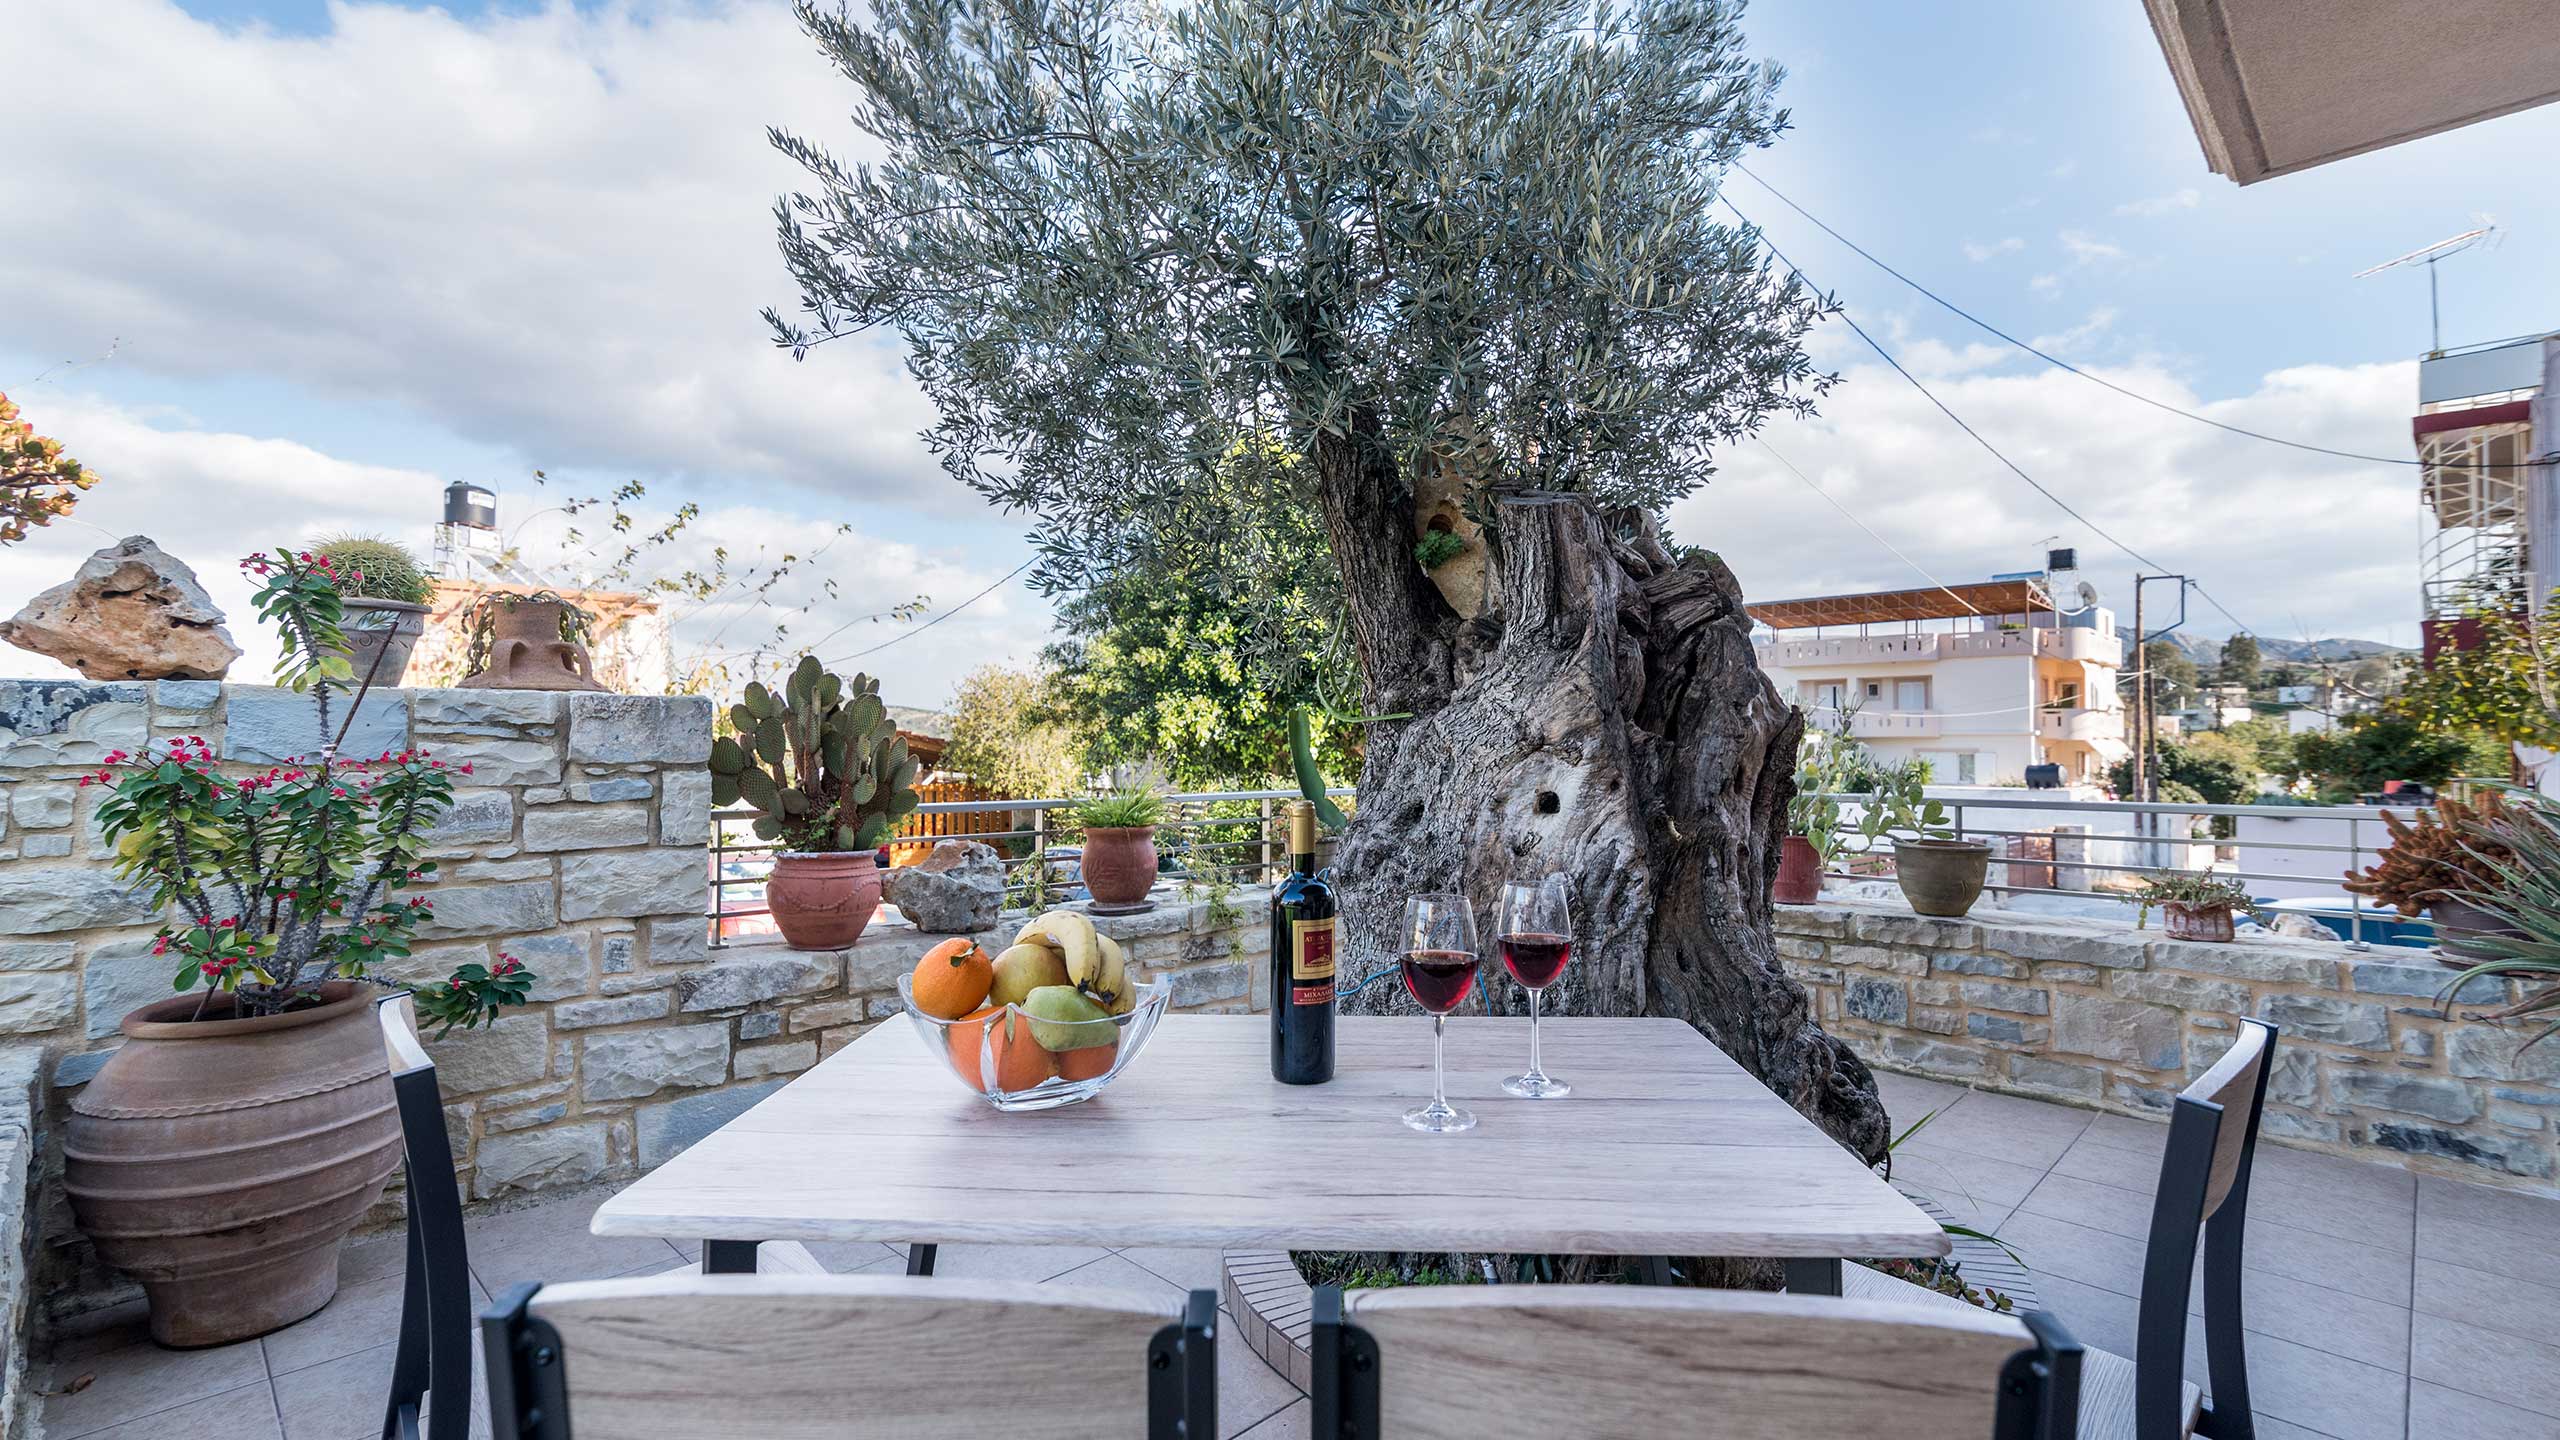 Pitsidia Olive Tree